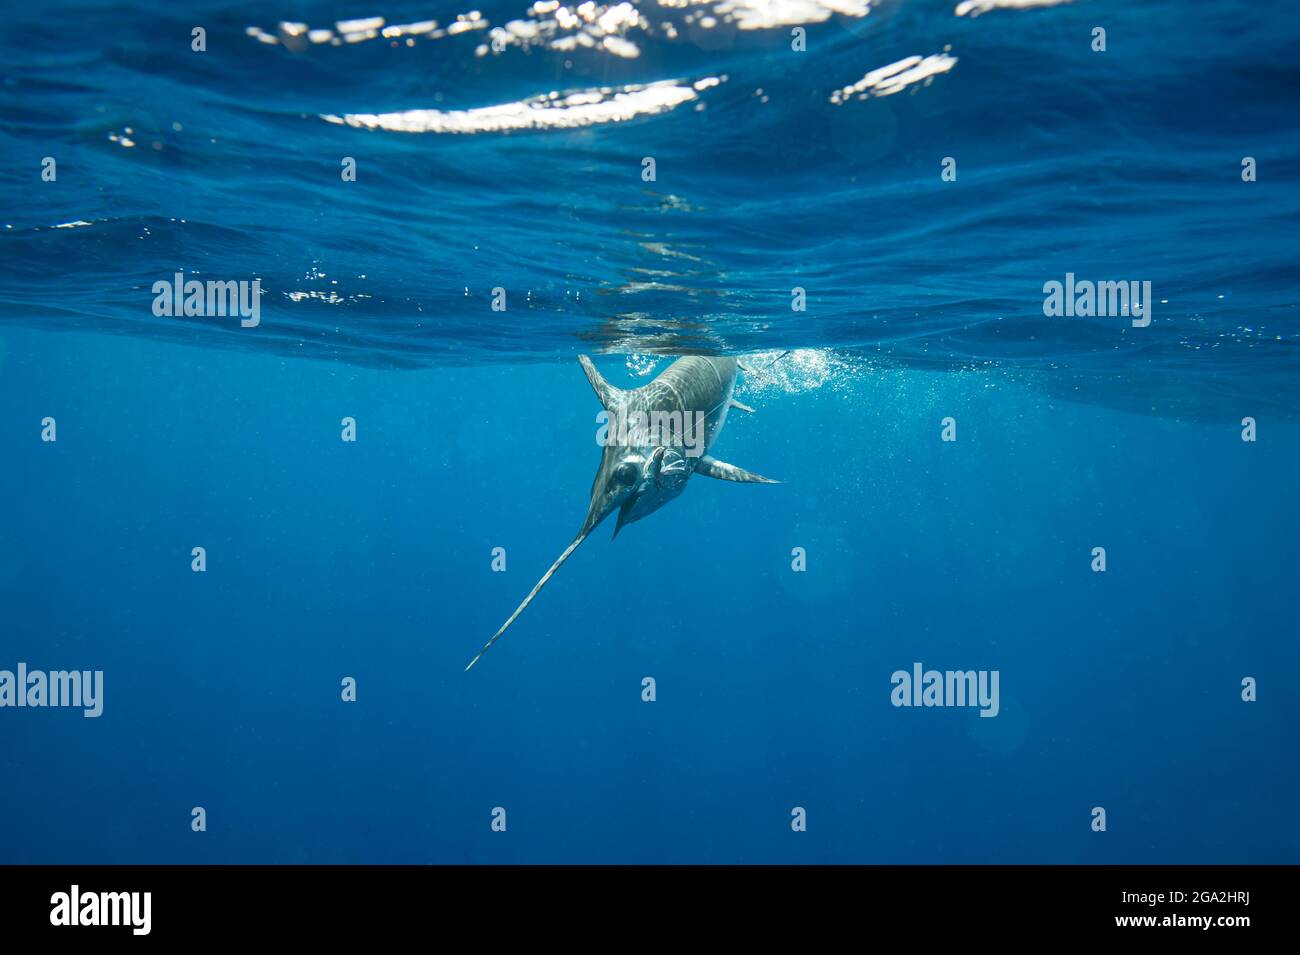 A swordfish (Xiphias gladius) caught by fishing line under the water; Islamorada, Florida, United States of America Stock Photo